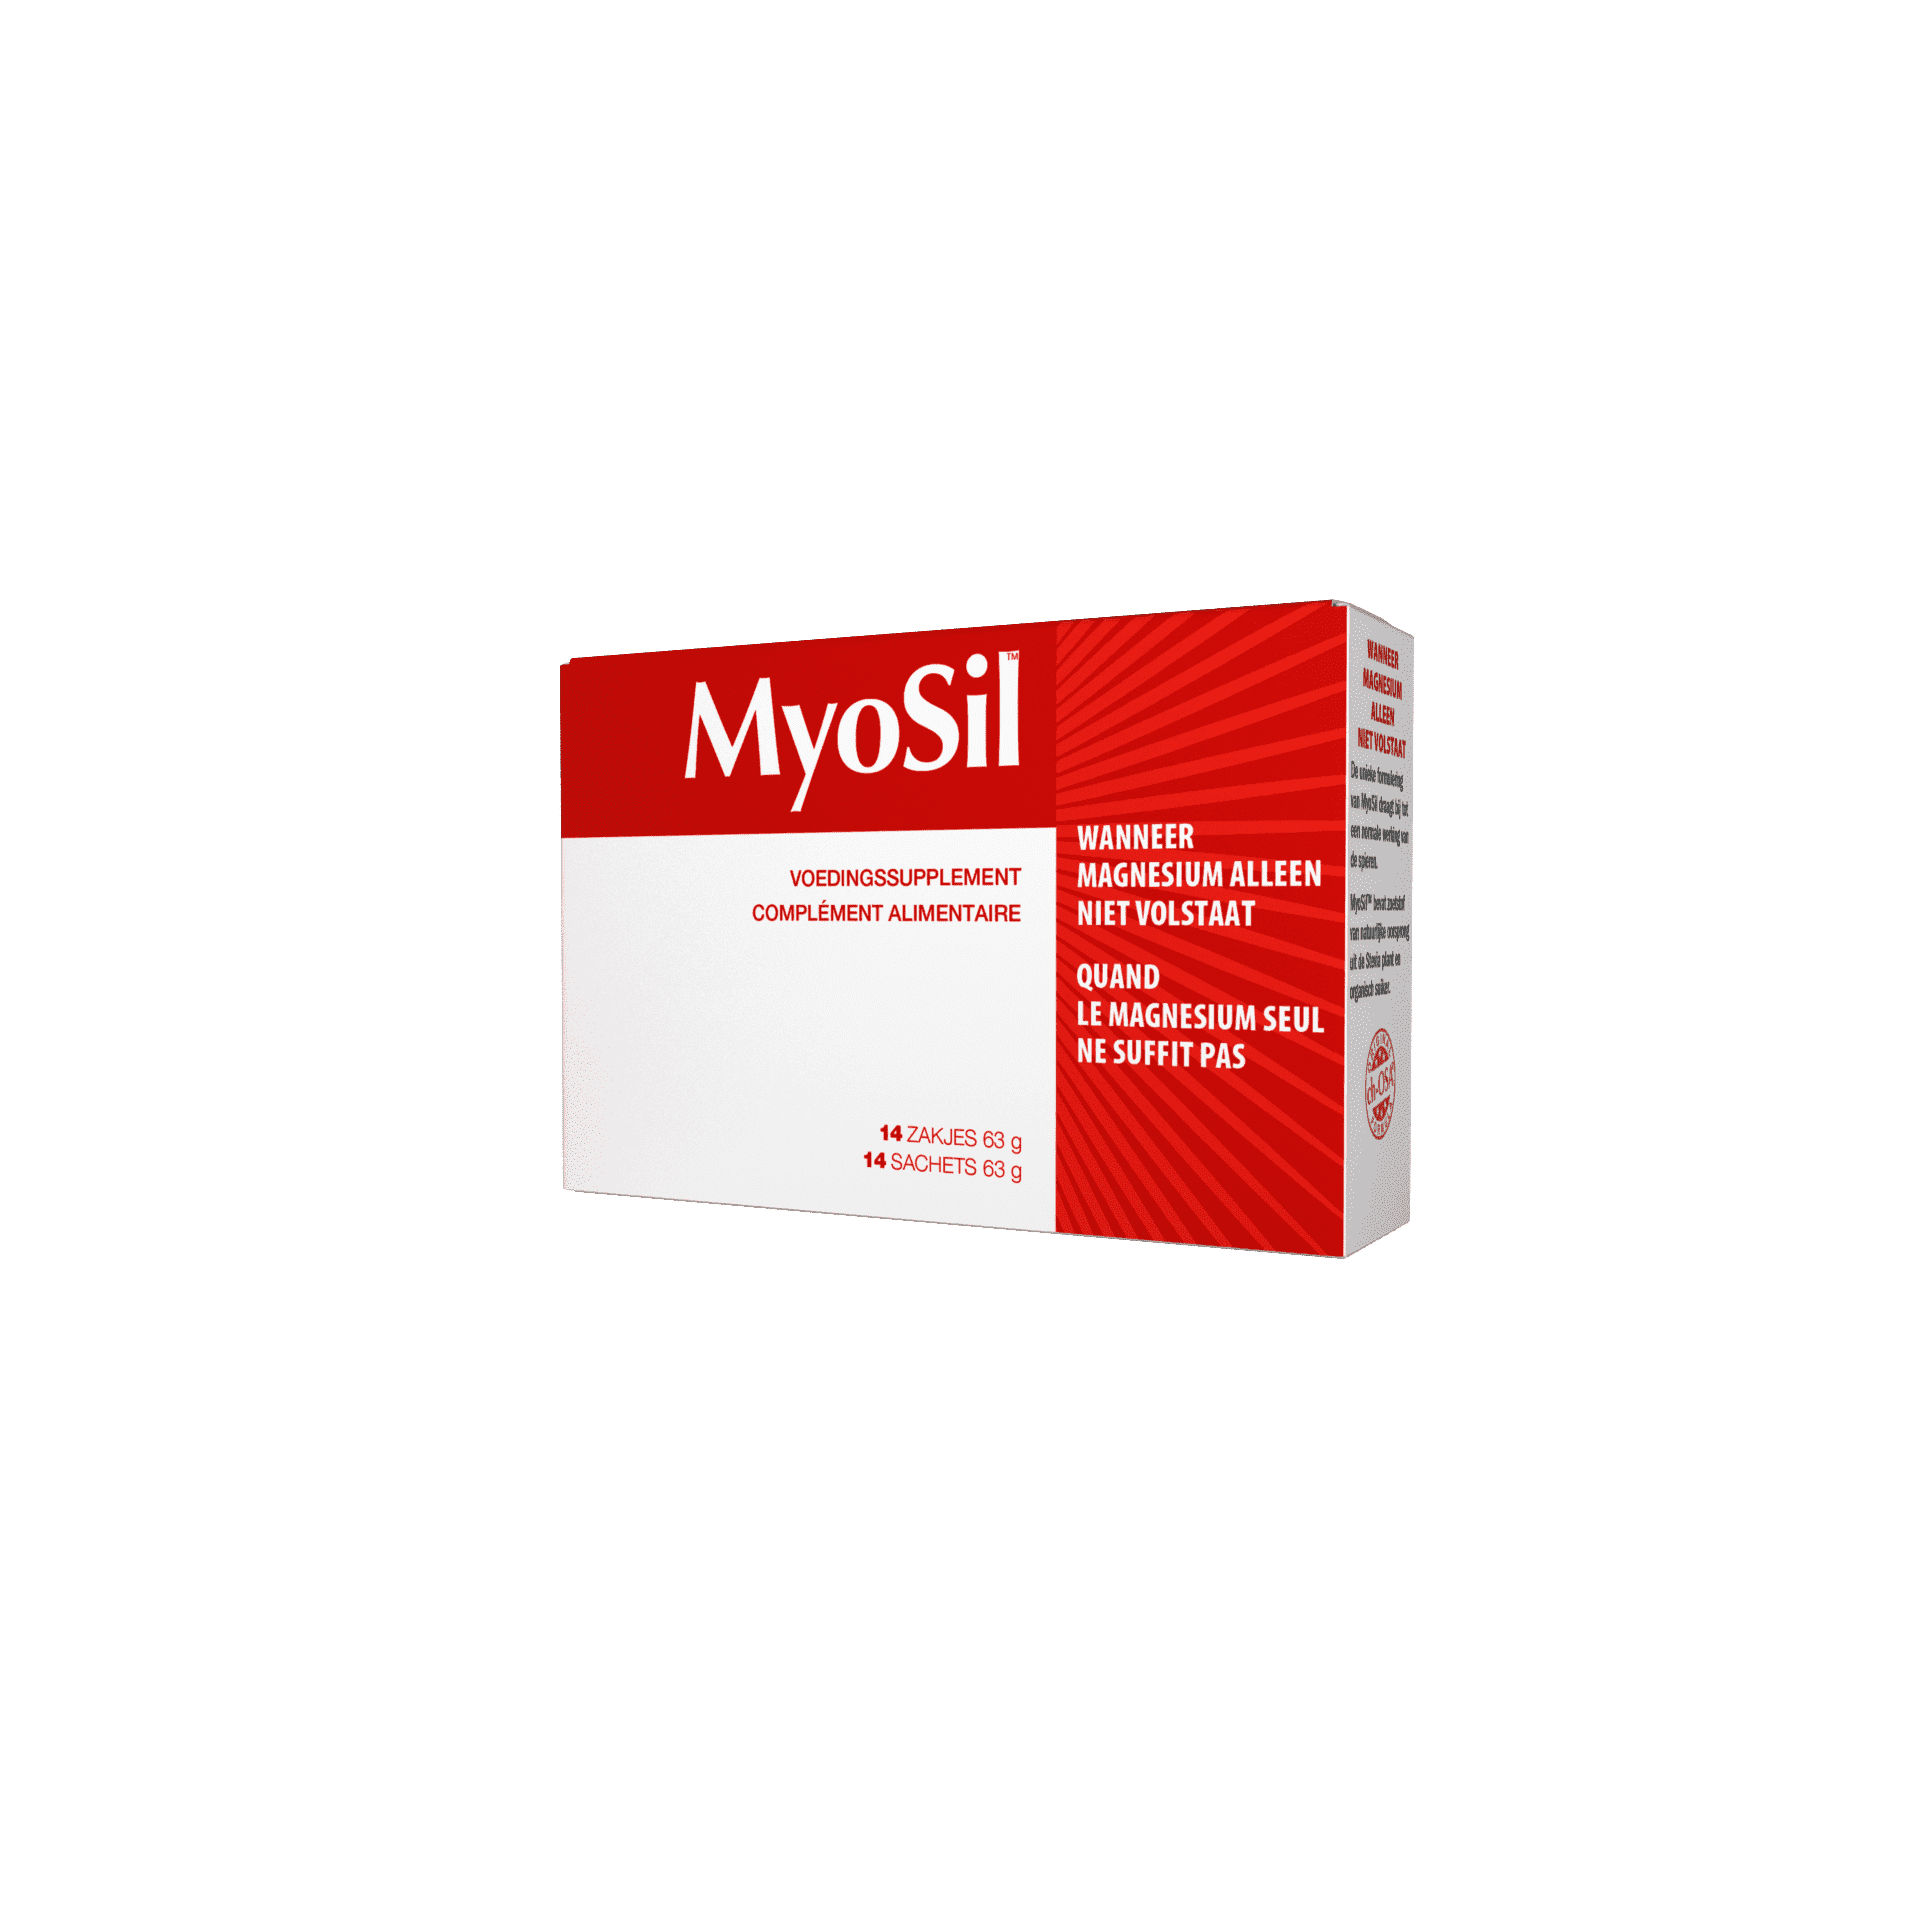 Myosil 14 zakjes